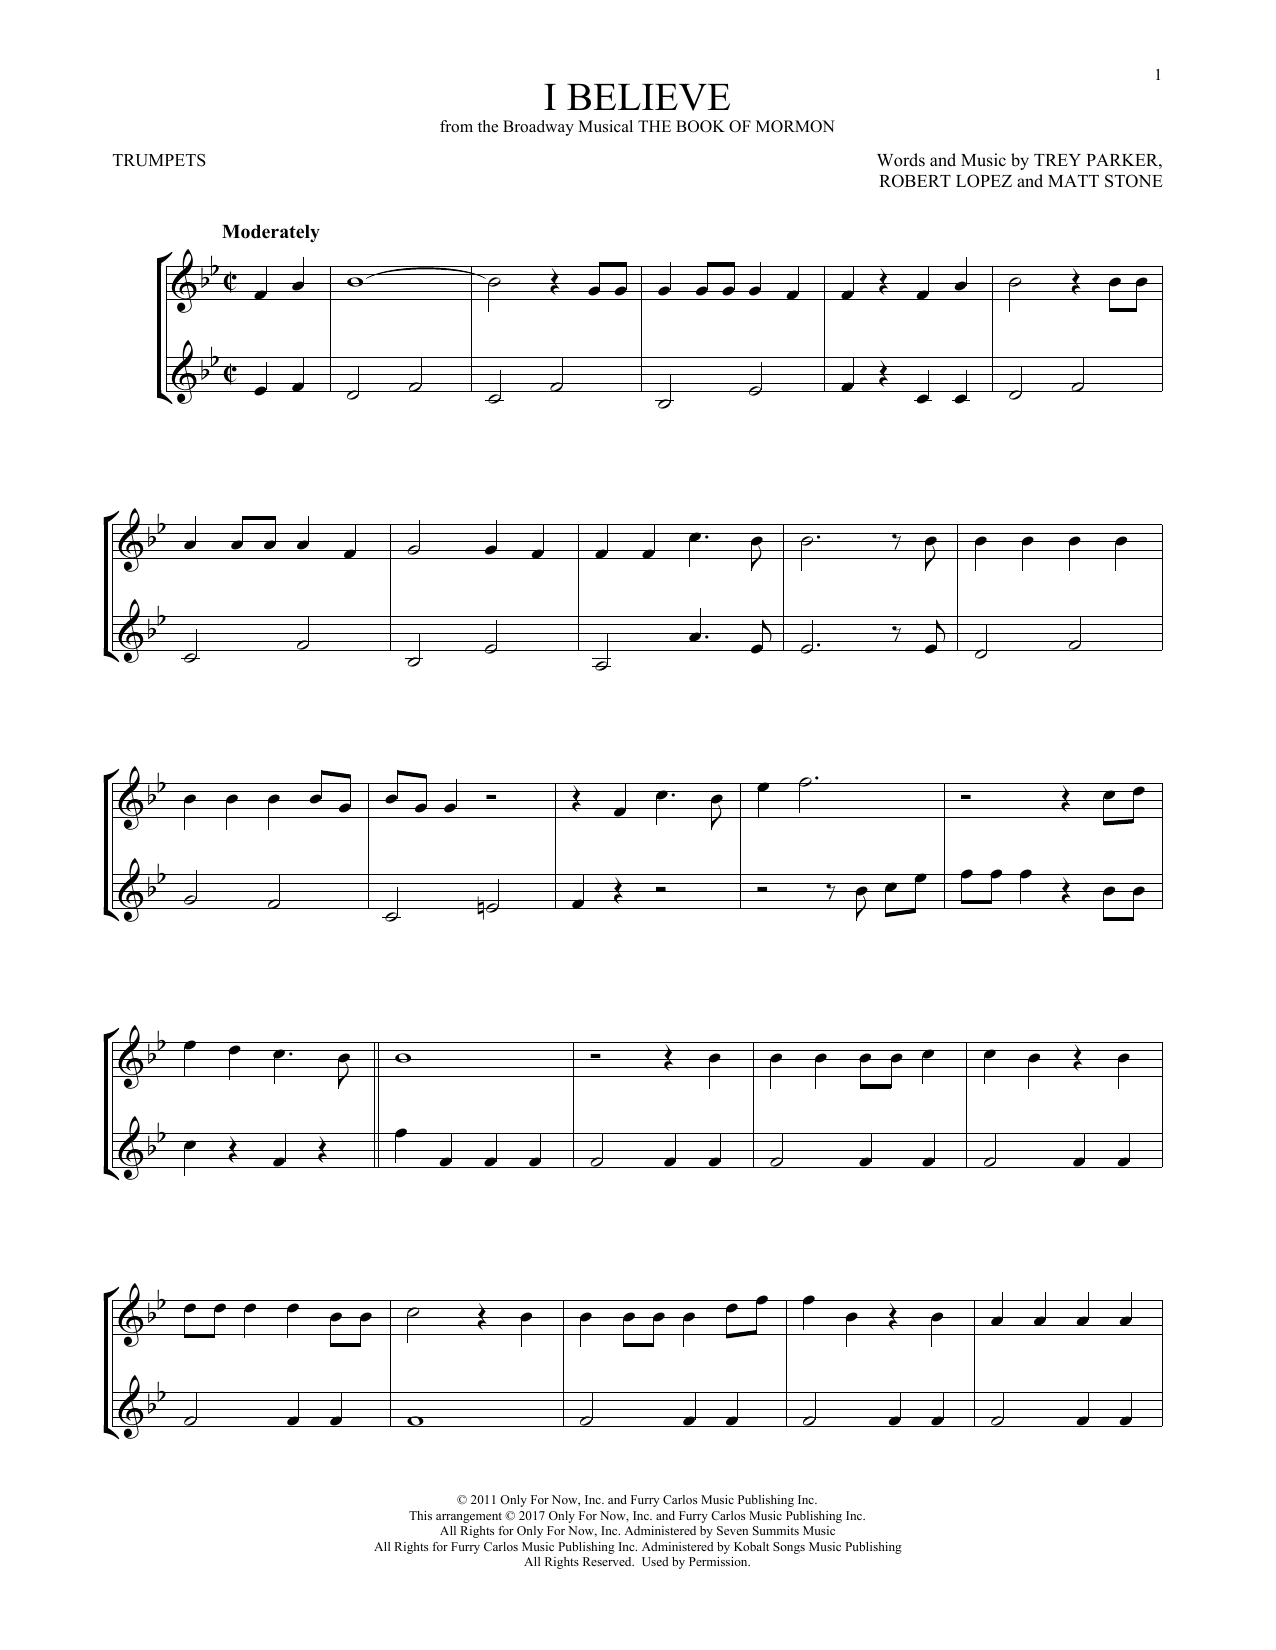 Trey Parker, Matt Stone & Robert Lopez I Believe Sheet Music Notes & Chords for Alto Saxophone Duet - Download or Print PDF